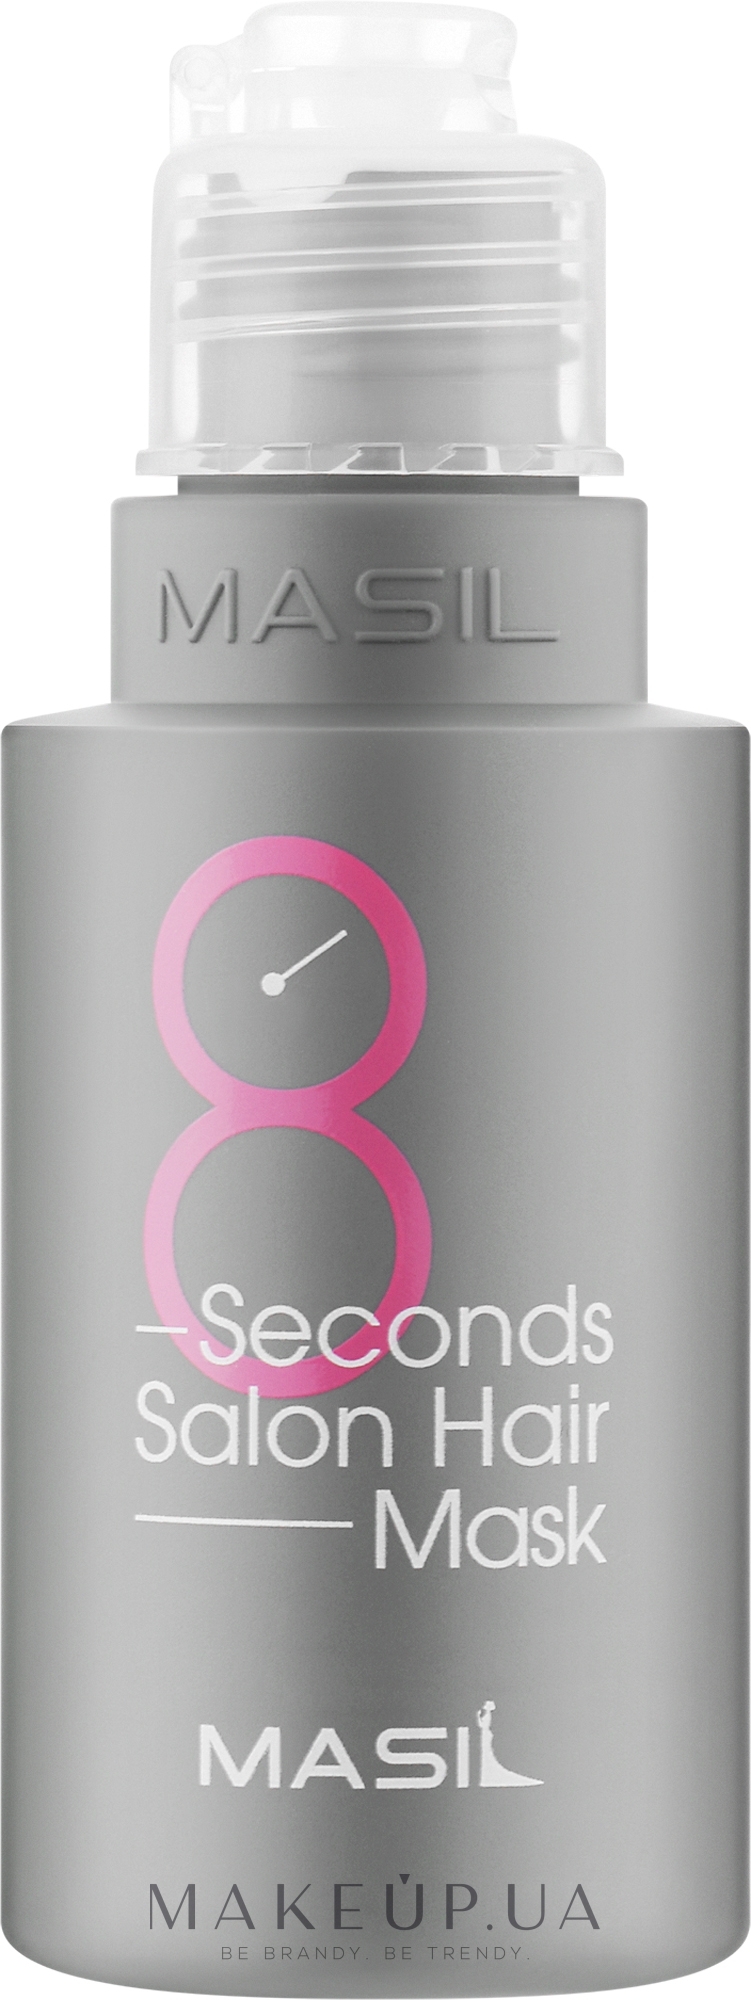 Маска для волос, салонный эффект за 8 секунд - Masil 8 Seconds Salon Hair Mask